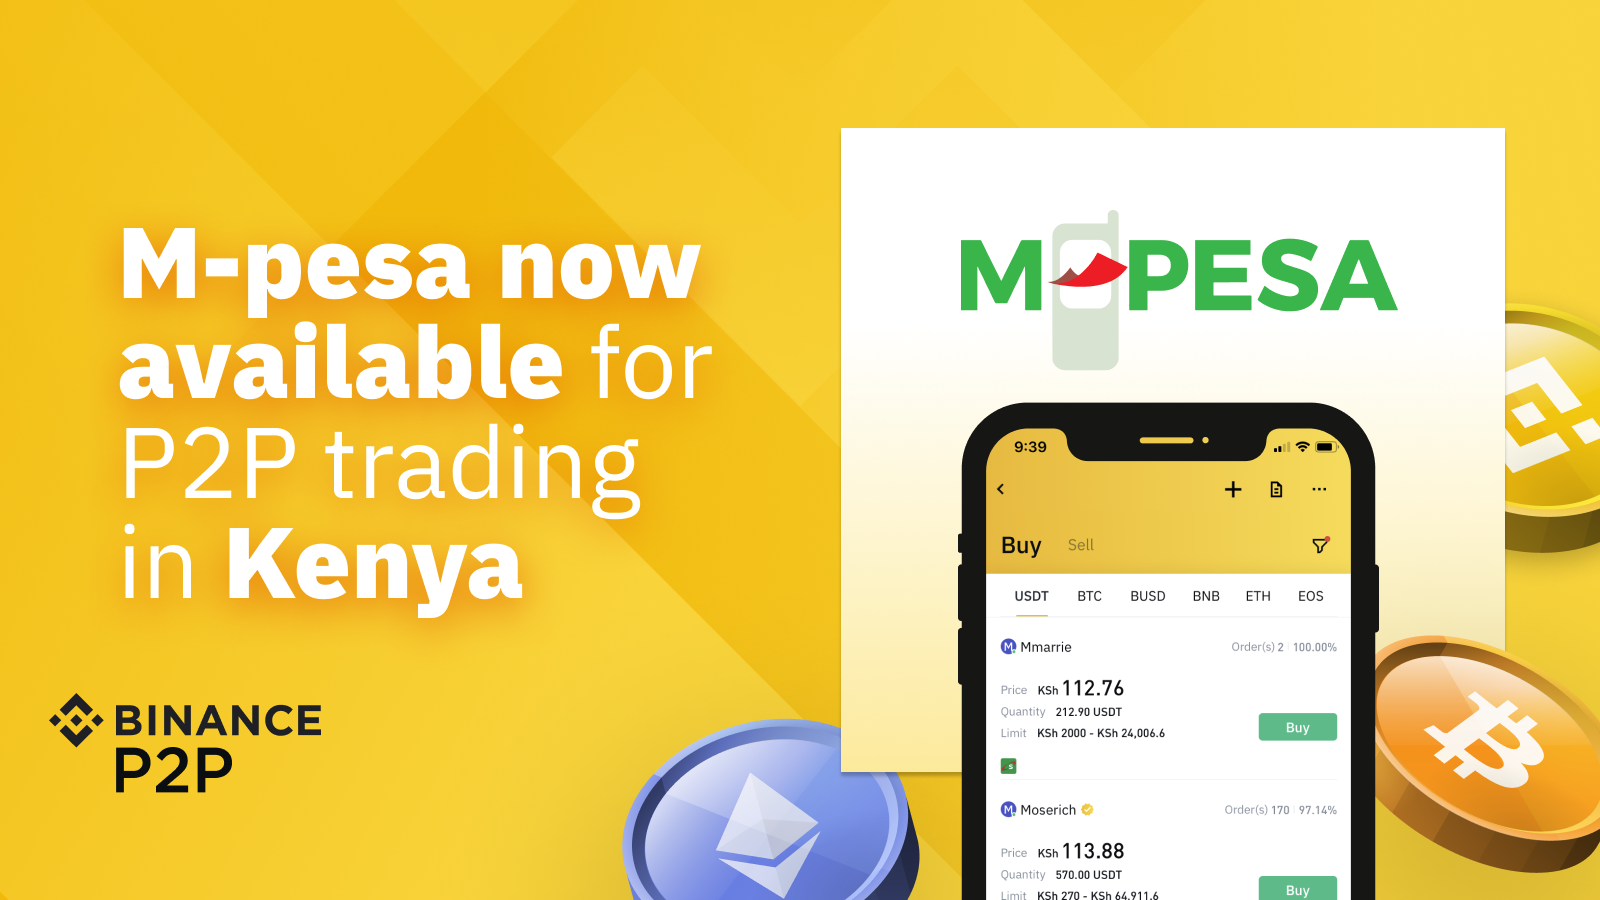 Binance P2P: Buy Bitcoin in Kenya via M-Pesa - Binance ...